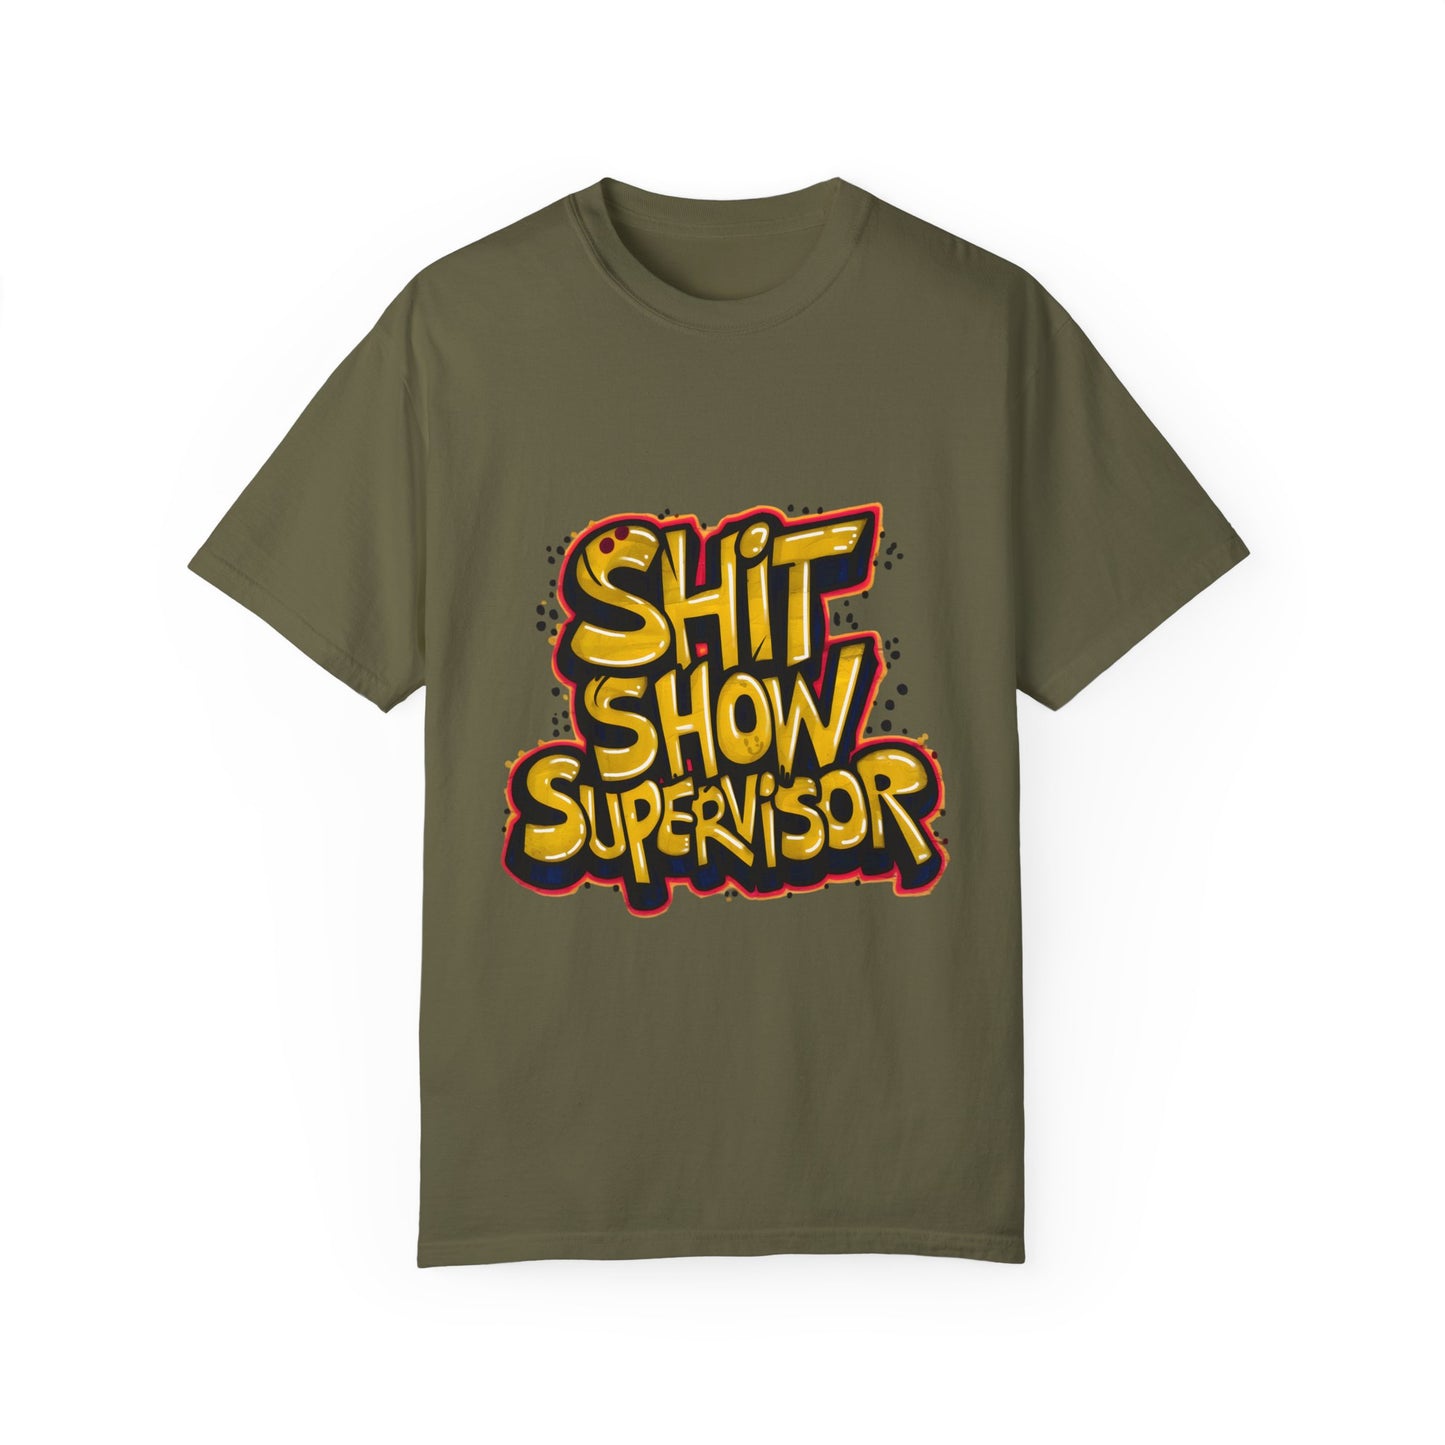 Shit Show Supervisor Urban Sarcastic Graphic Unisex Garment Dyed T-shirt Cotton Funny Humorous Graphic Soft Premium Unisex Men Women Sage T-shirt Birthday Gift-13